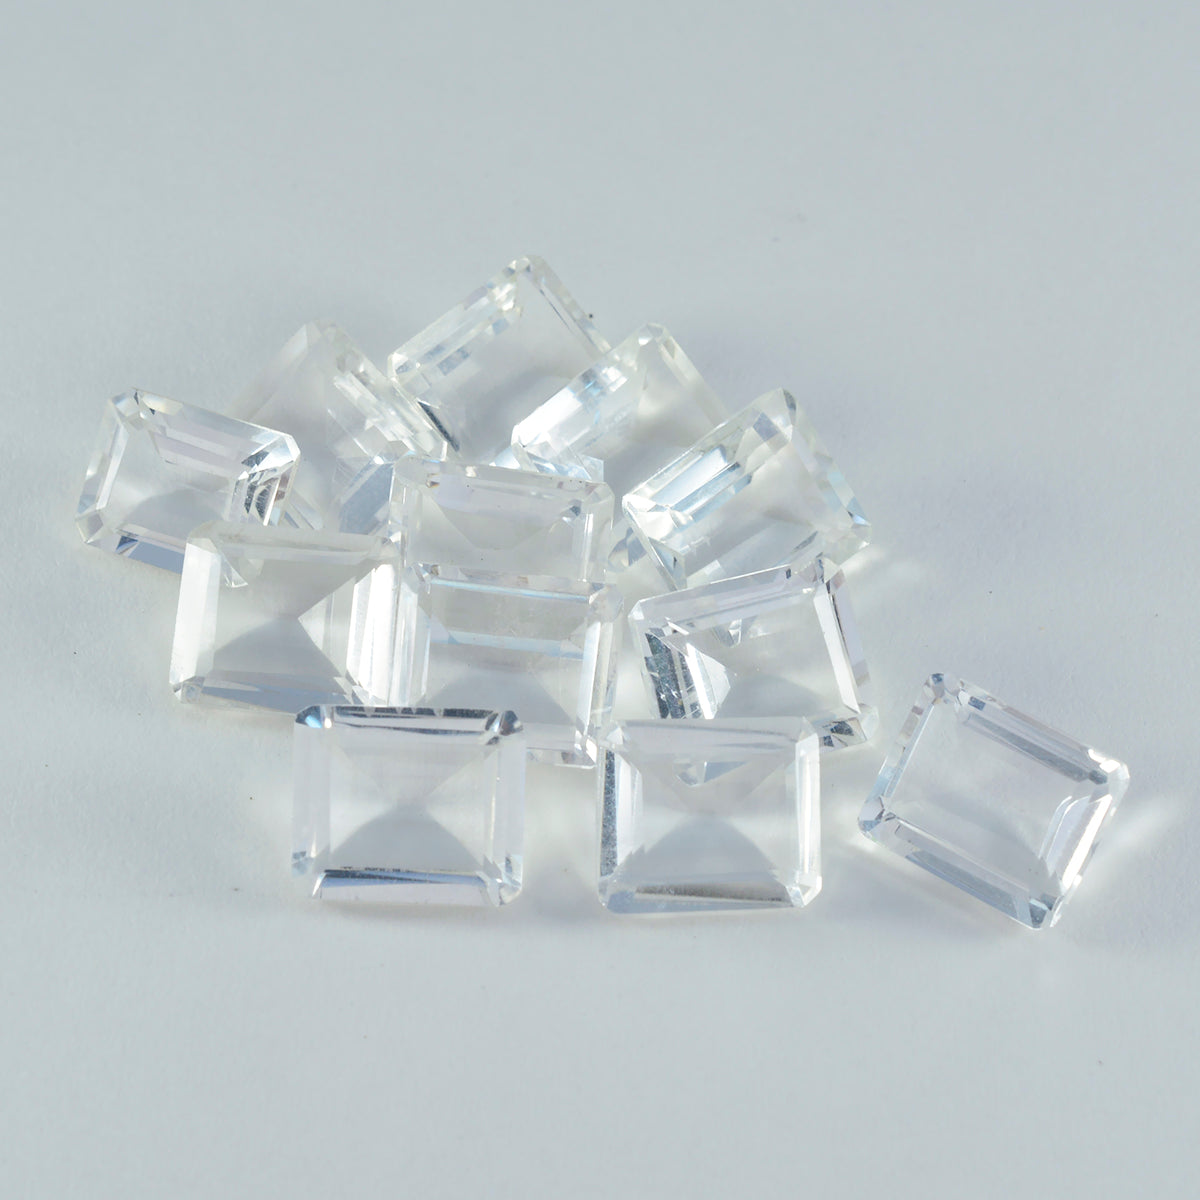 Riyogems 1PC White Crystal Quartz Faceted 5x7 mm Octagon Shape fantastic Quality Loose Gems